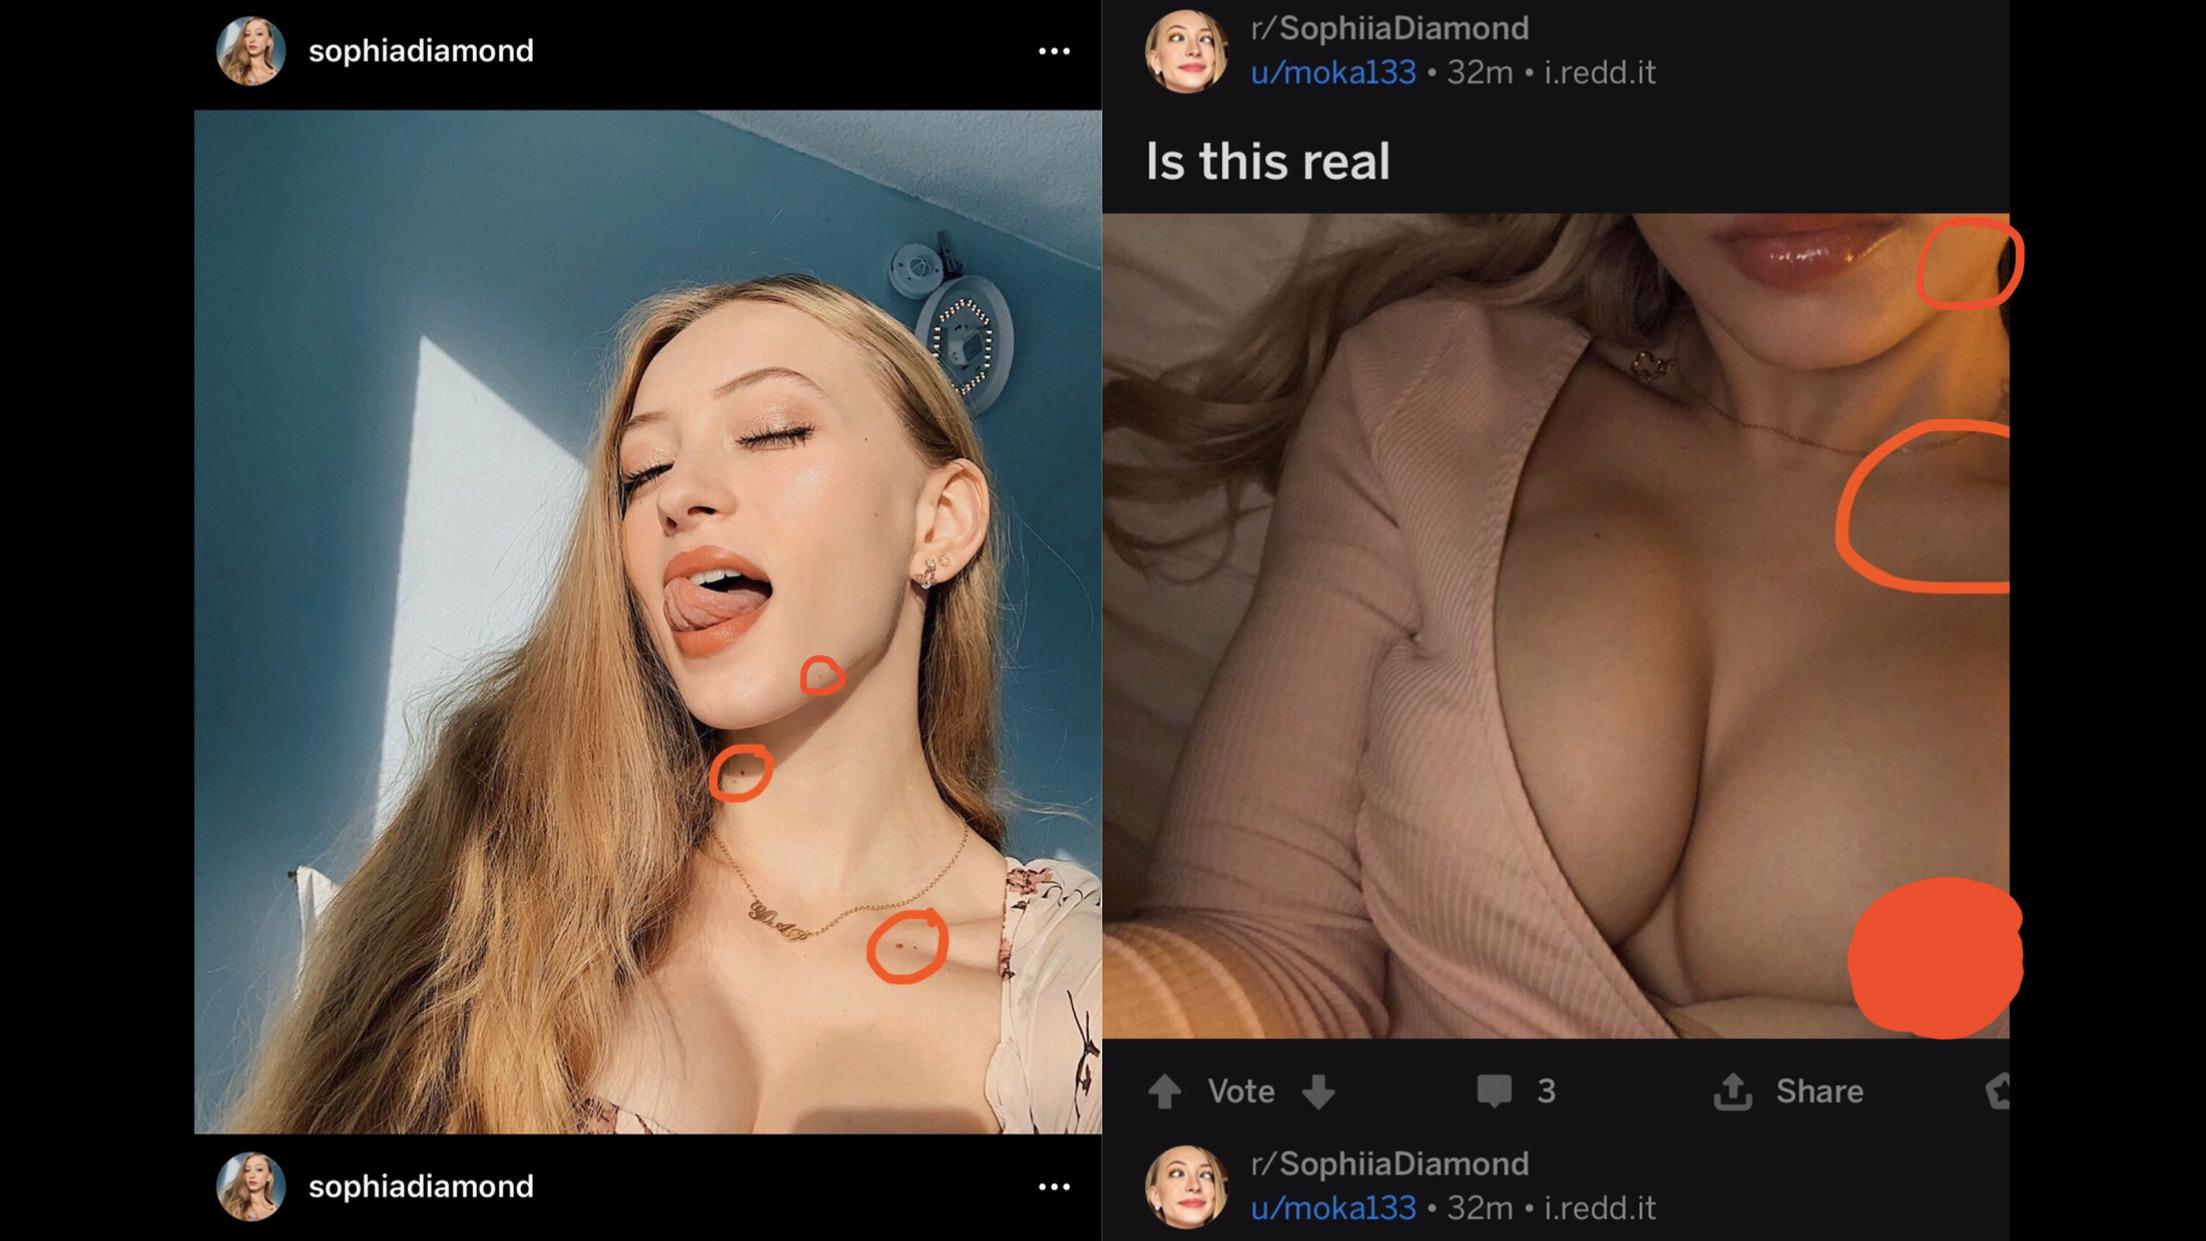 NEW PORN: Sophia Diamond Nude & Sex Tape TikTok Star Leaked!